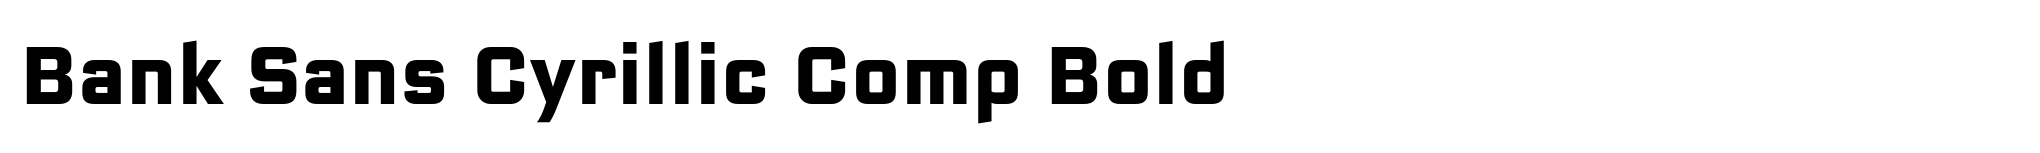 Bank Sans Cyrillic Comp Bold image